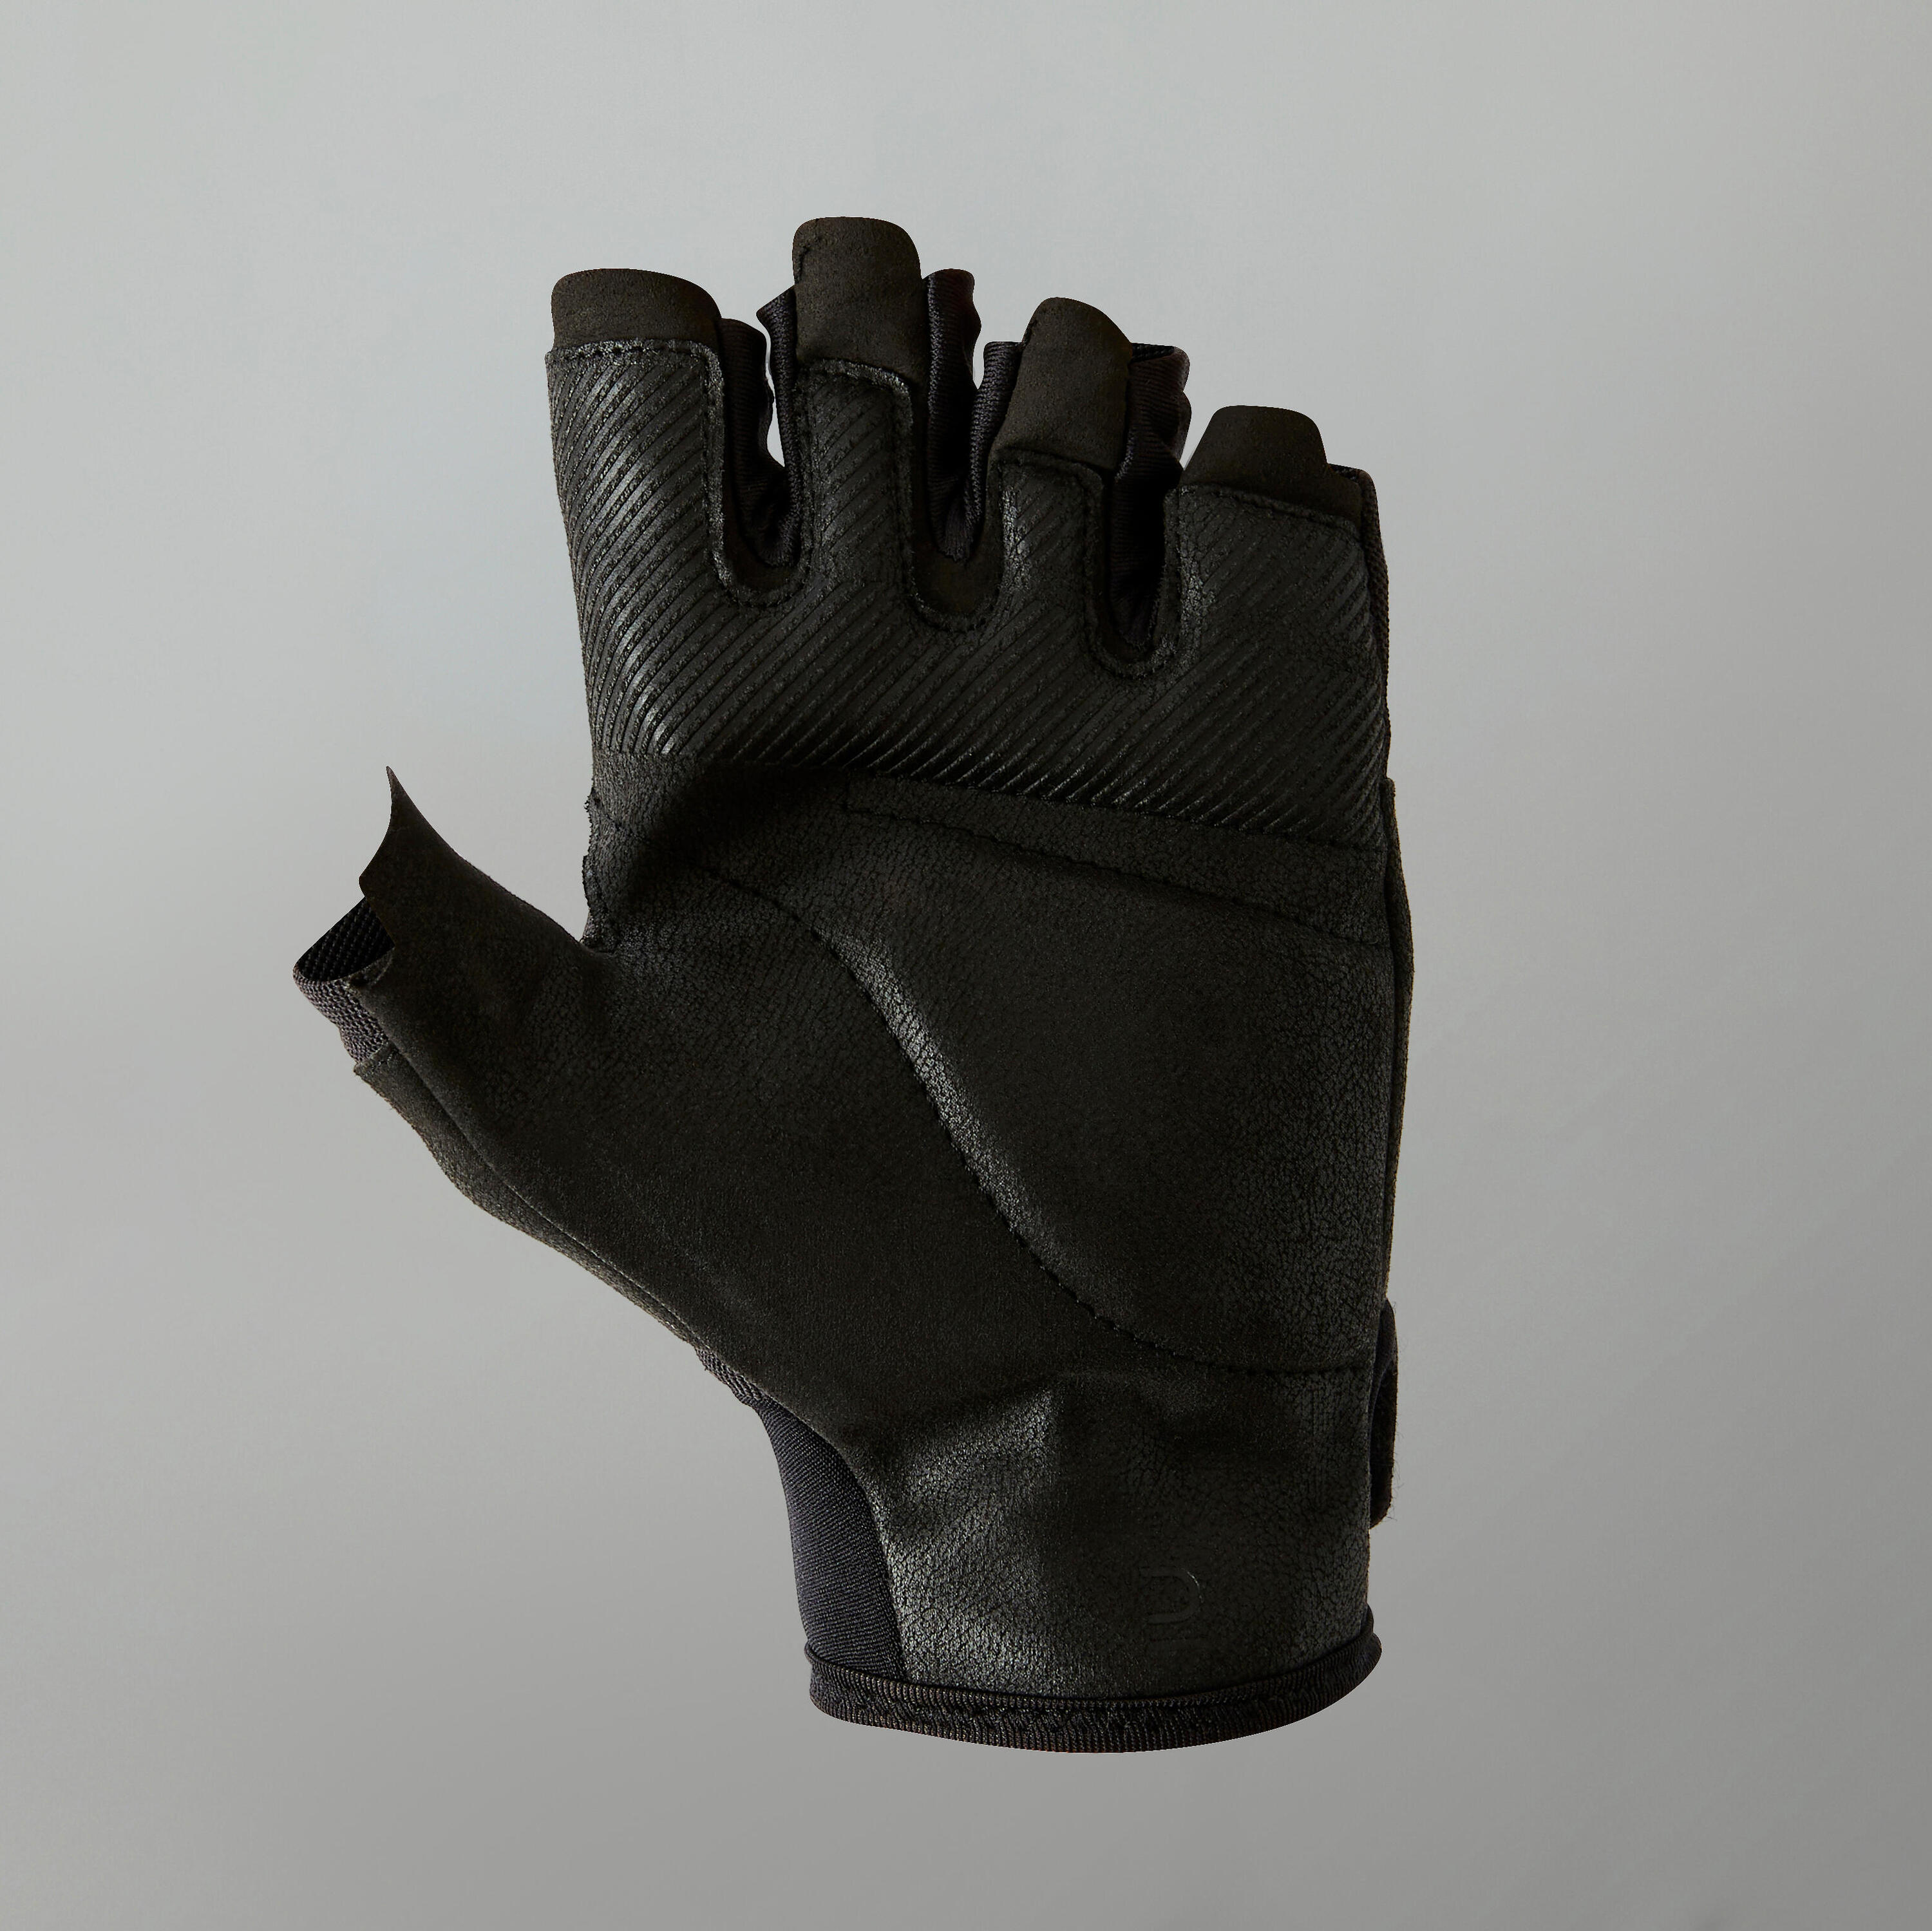 Weight Training Comfort Gloves - Black 2/2